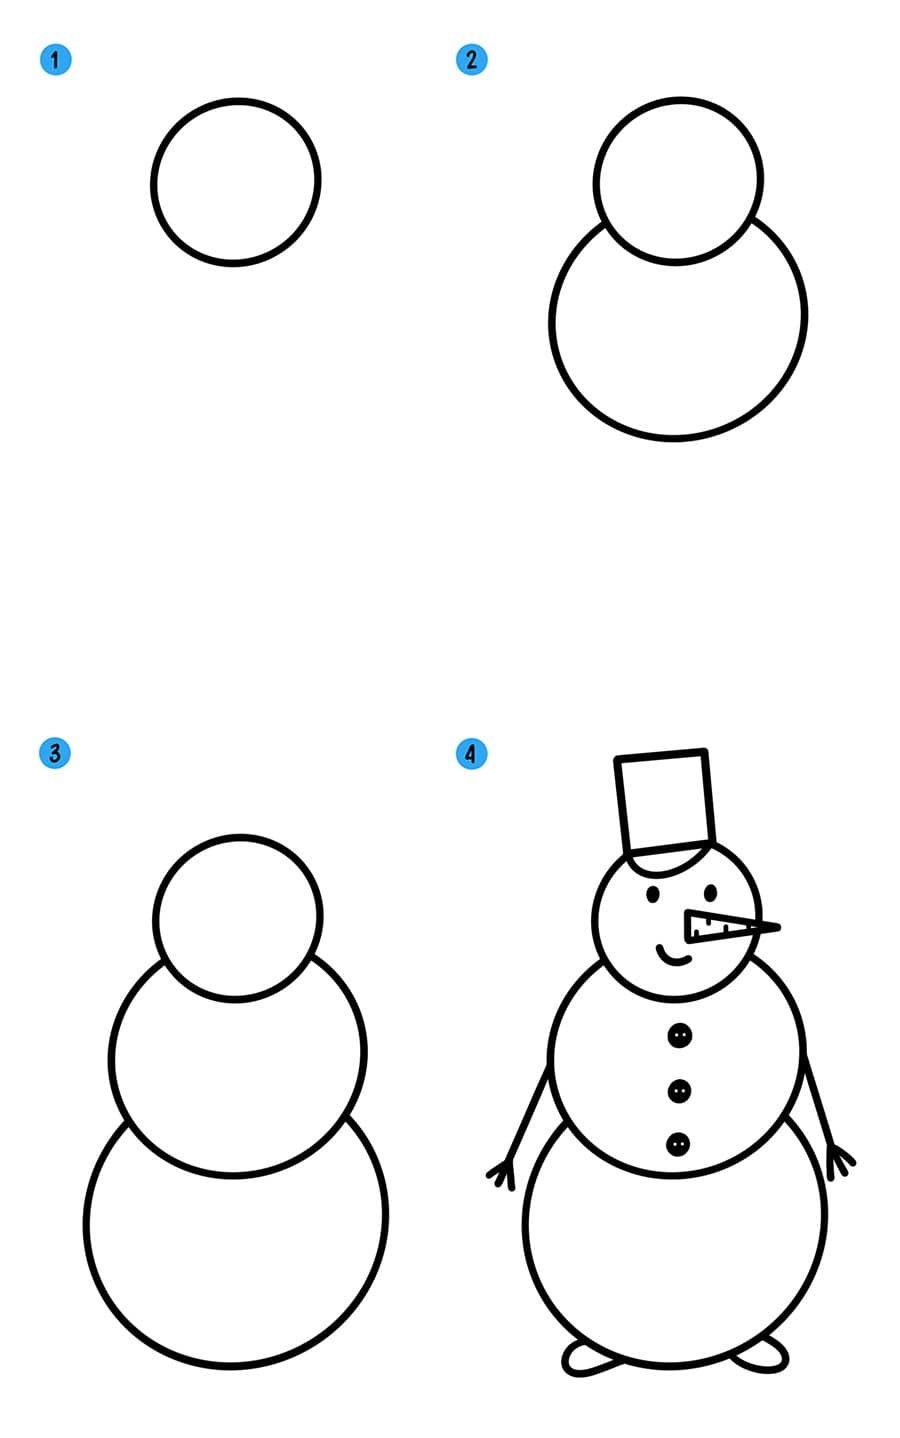 Поэтапное рисование снеговика